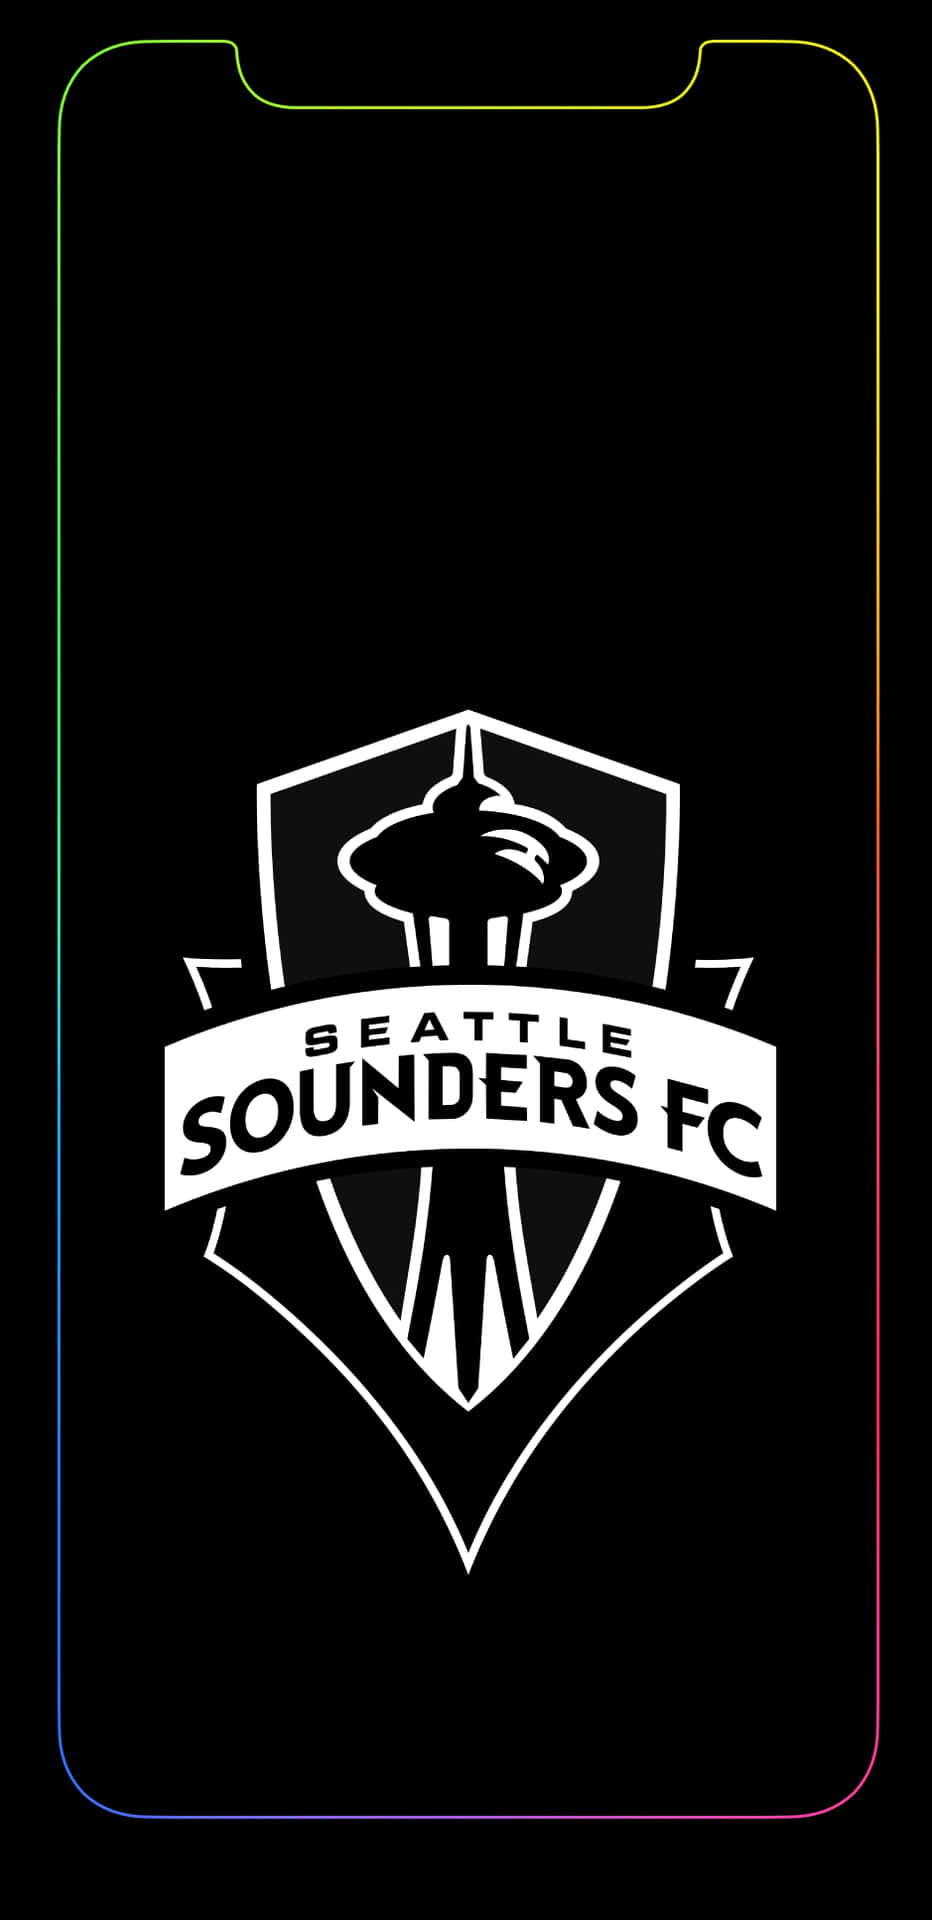 Seattlesounders Fc Minimalistisches Logo. Wallpaper